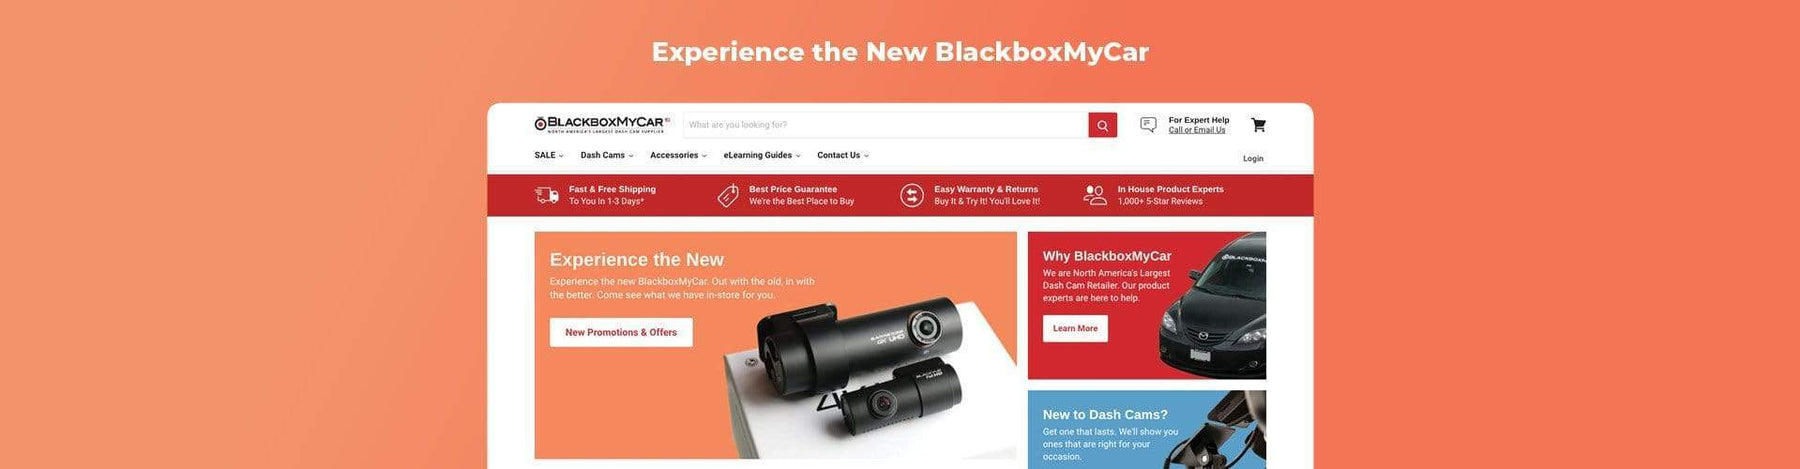 Experience the New BlackboxMyCar - - BlackboxMyCar